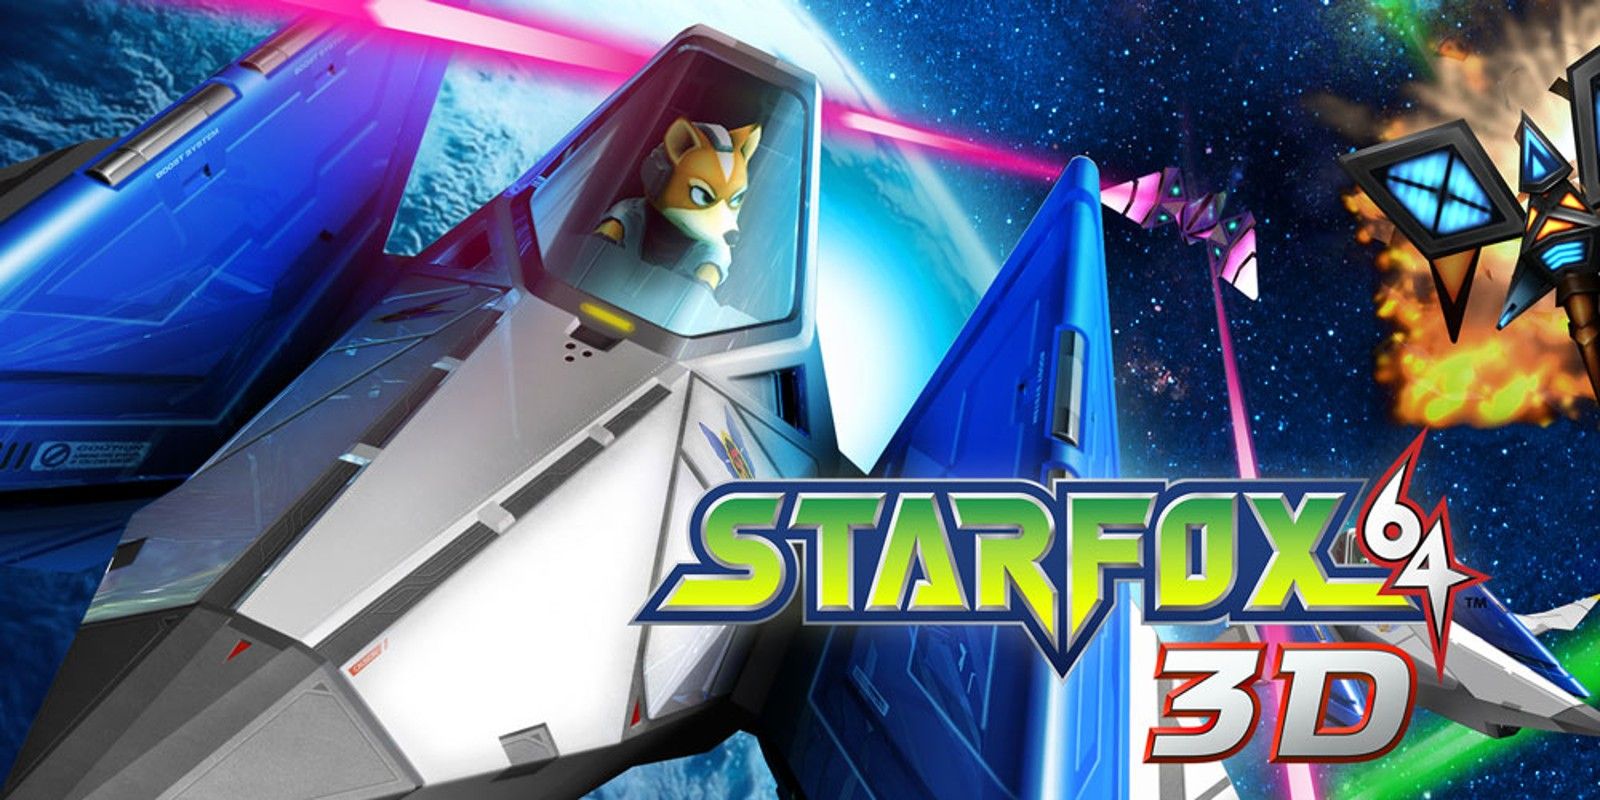 Fox McCloud in mid-battle on Star Fox 64 3D cover art